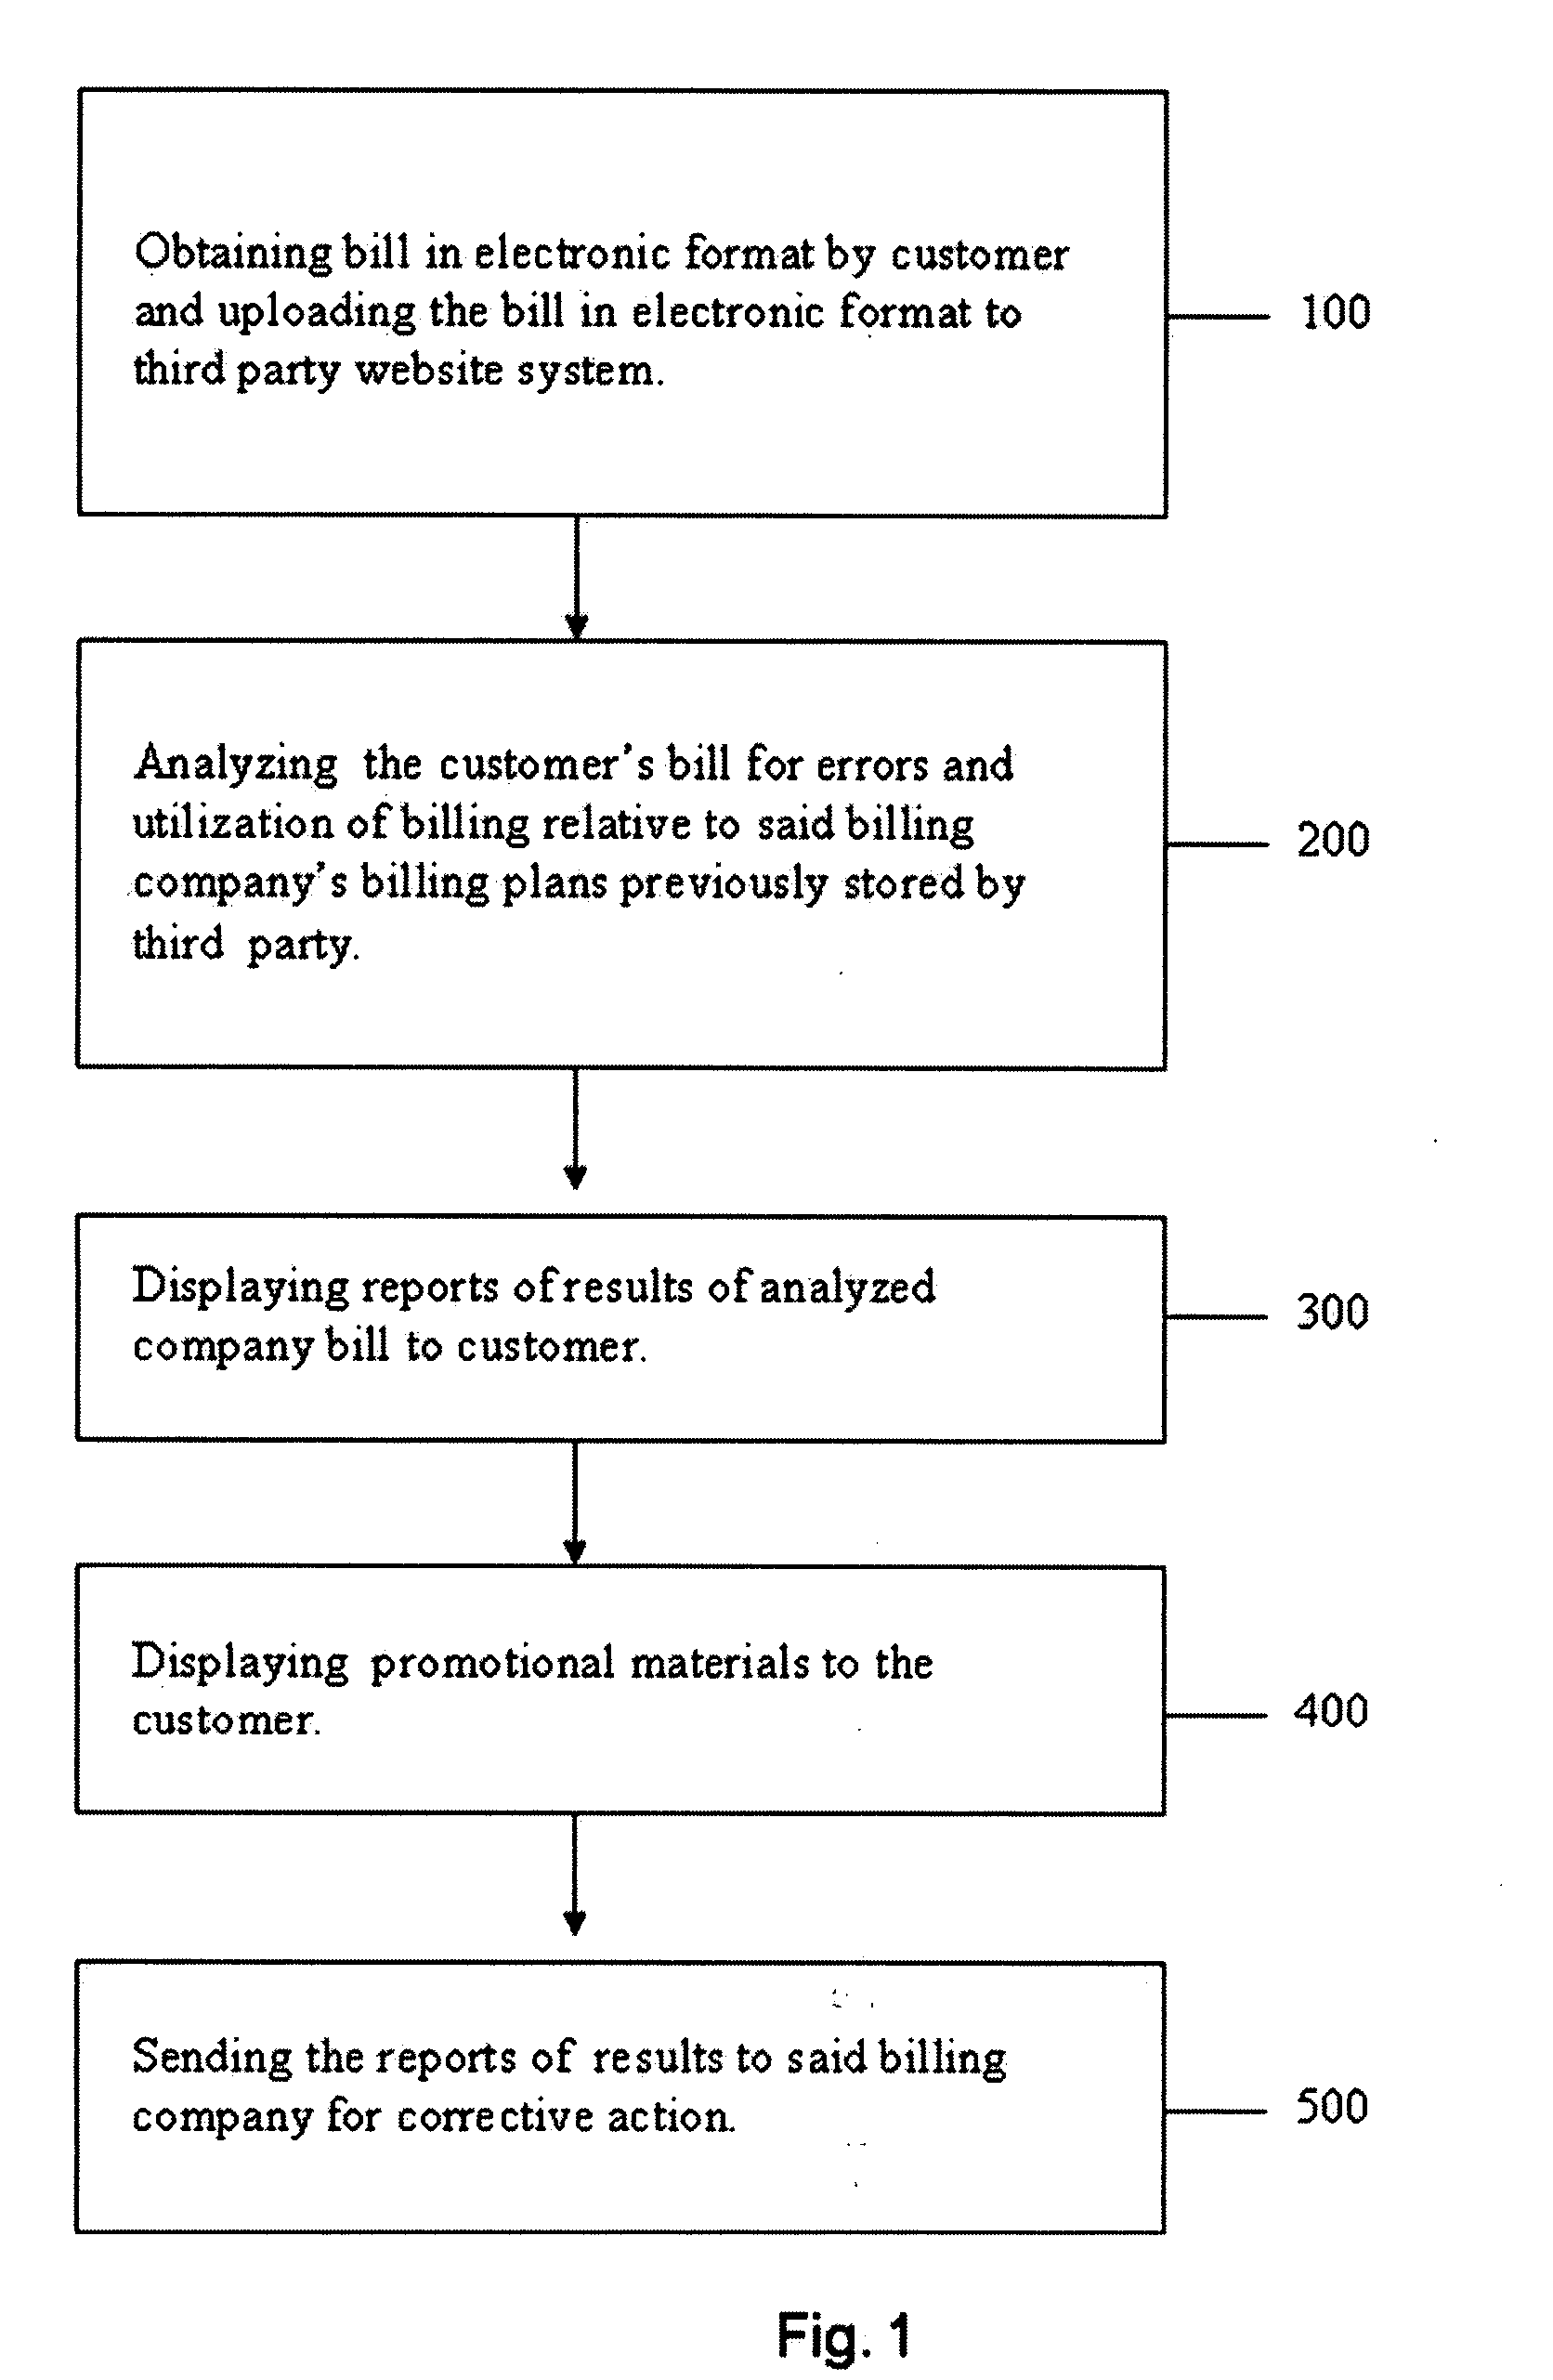 Web based auto bill analysis method